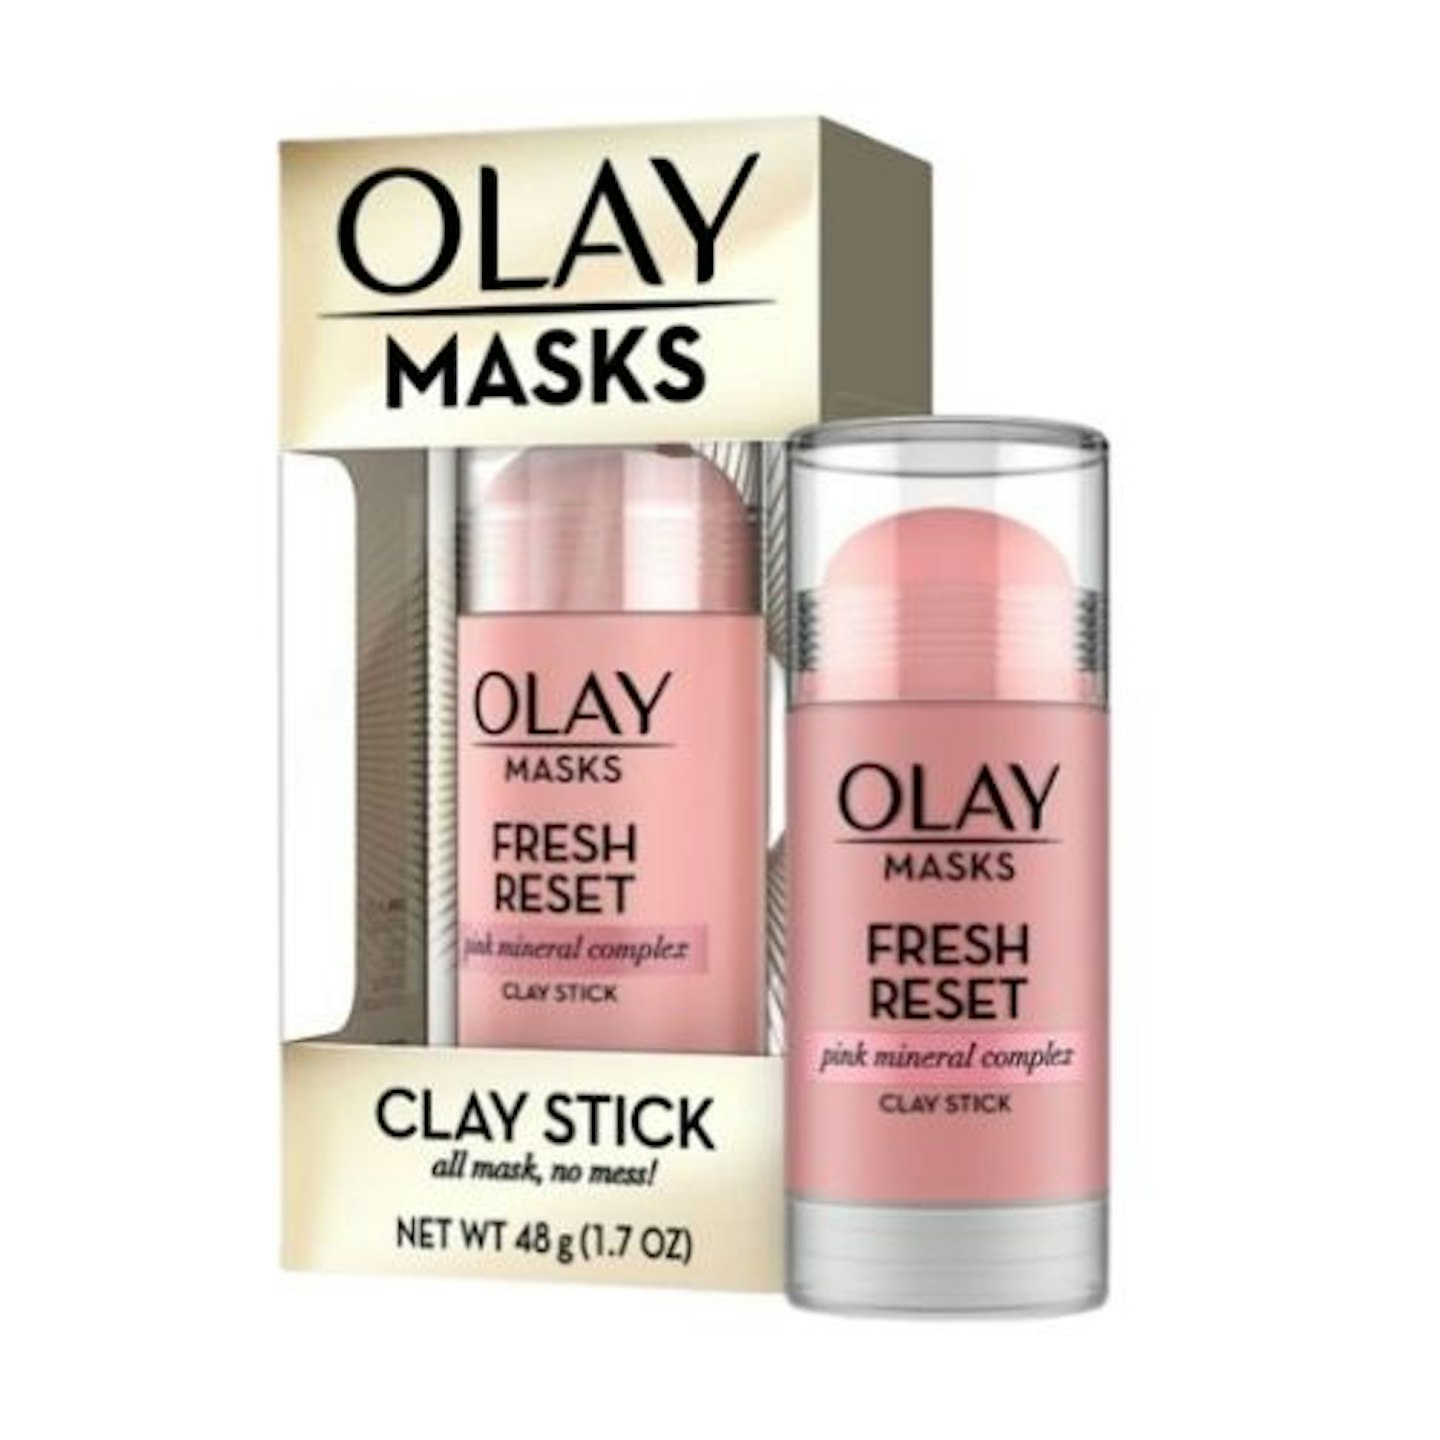 Olay Masks, Clay Stick Mask